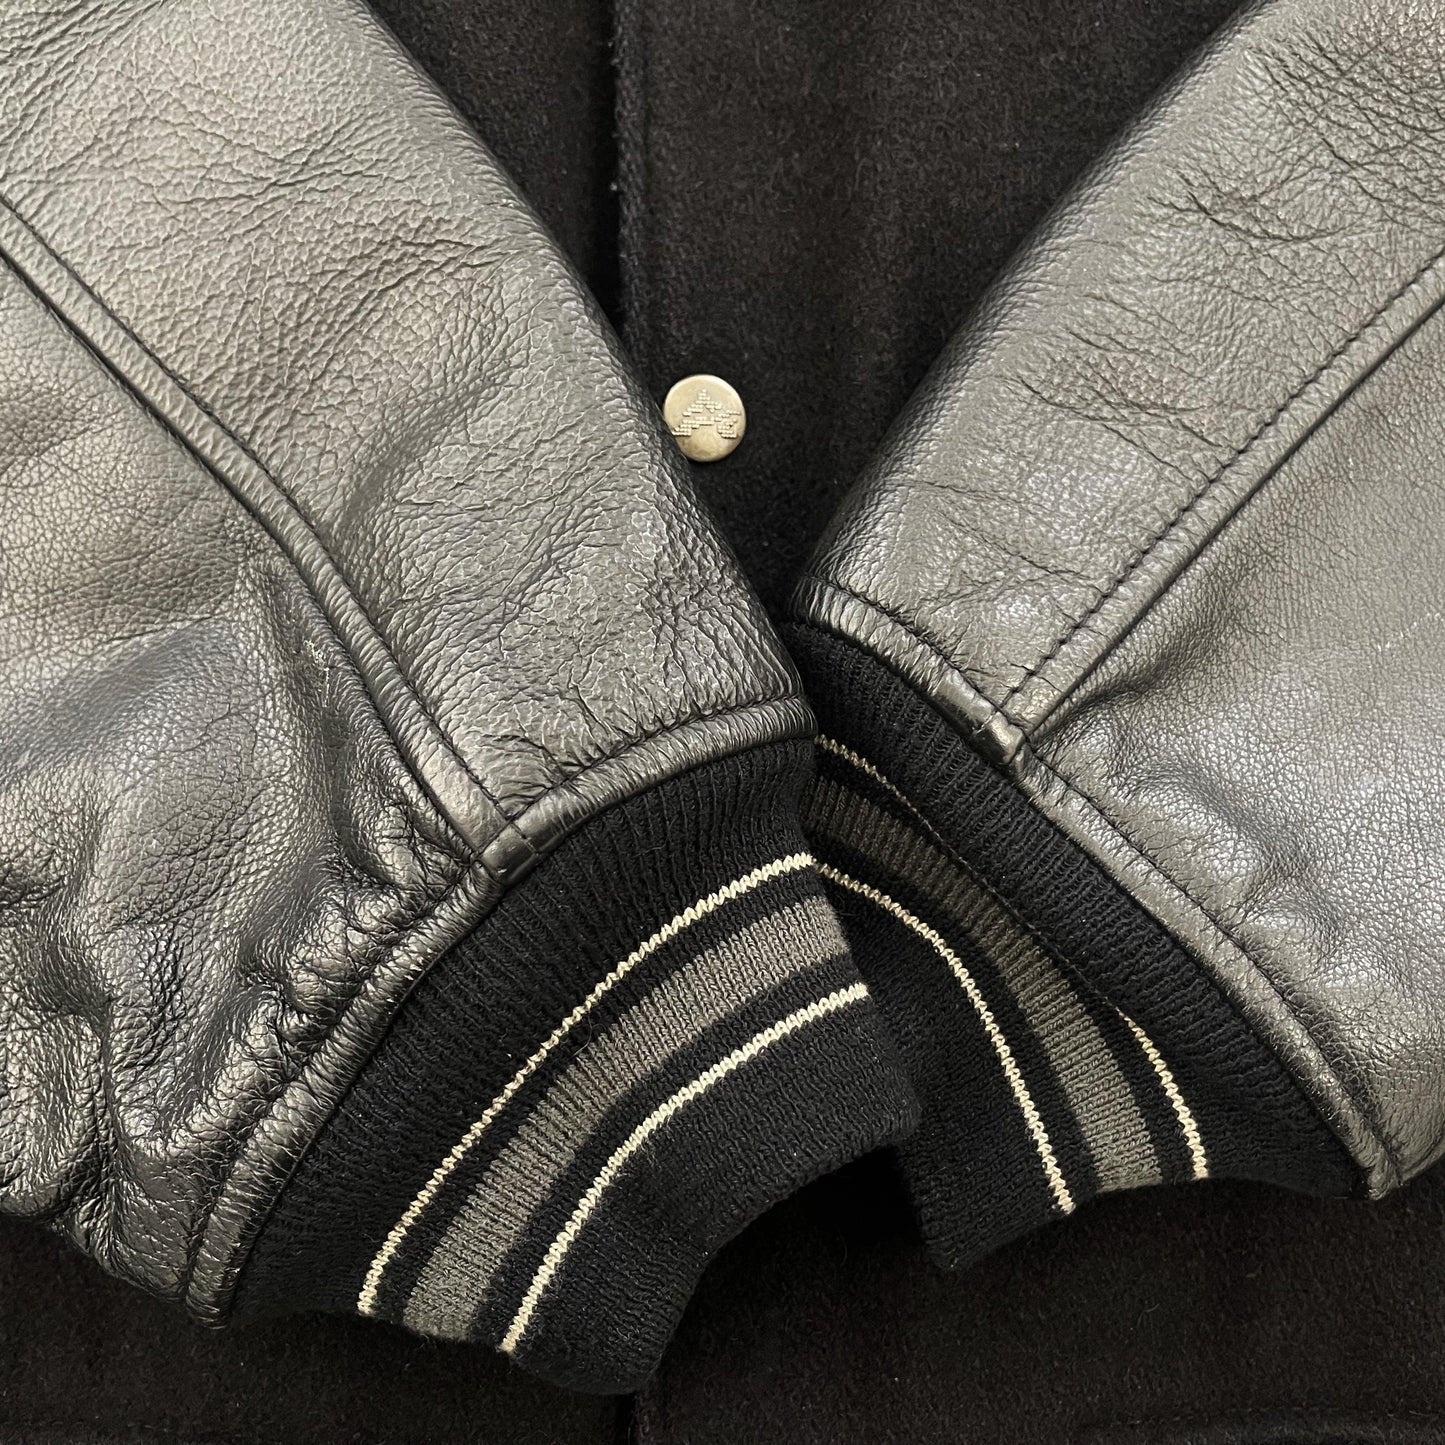 Avirex Wool Varsity Jacket - Known Source